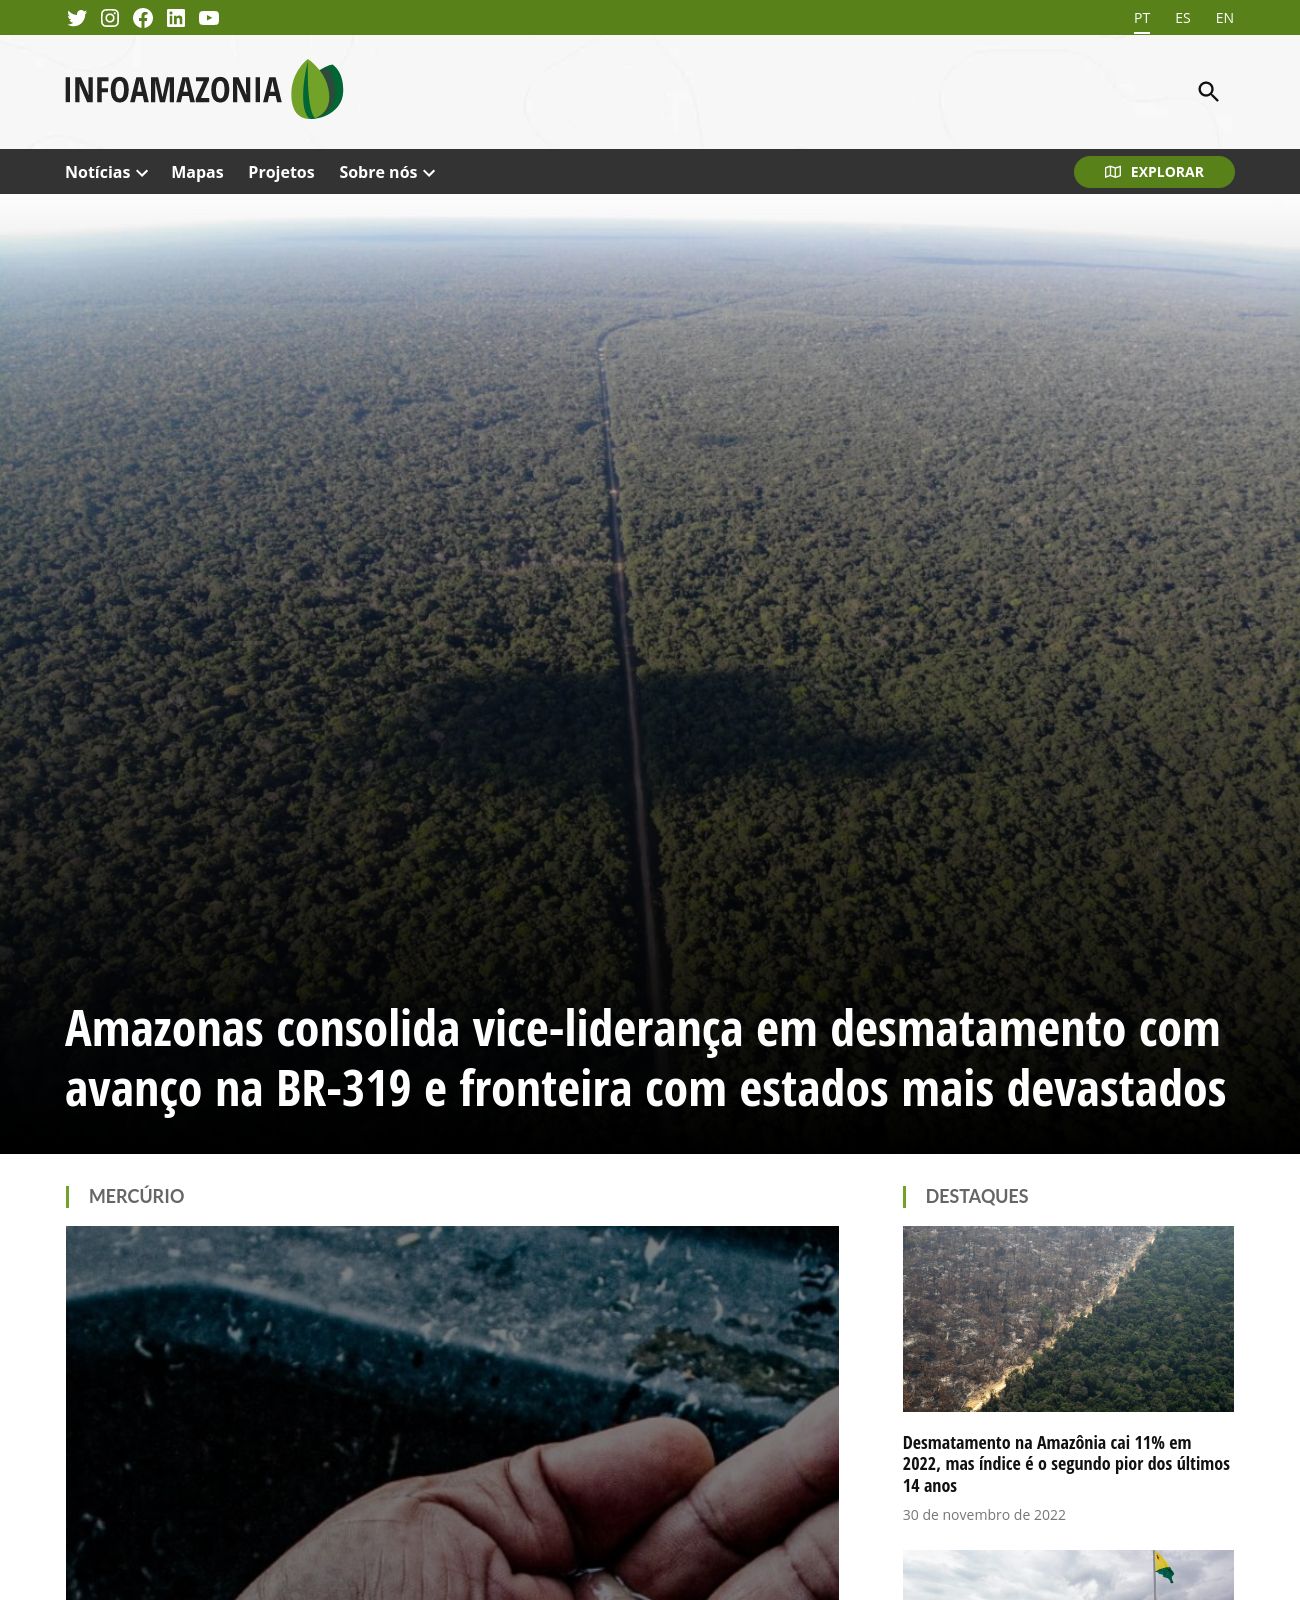 InfoAmazonia